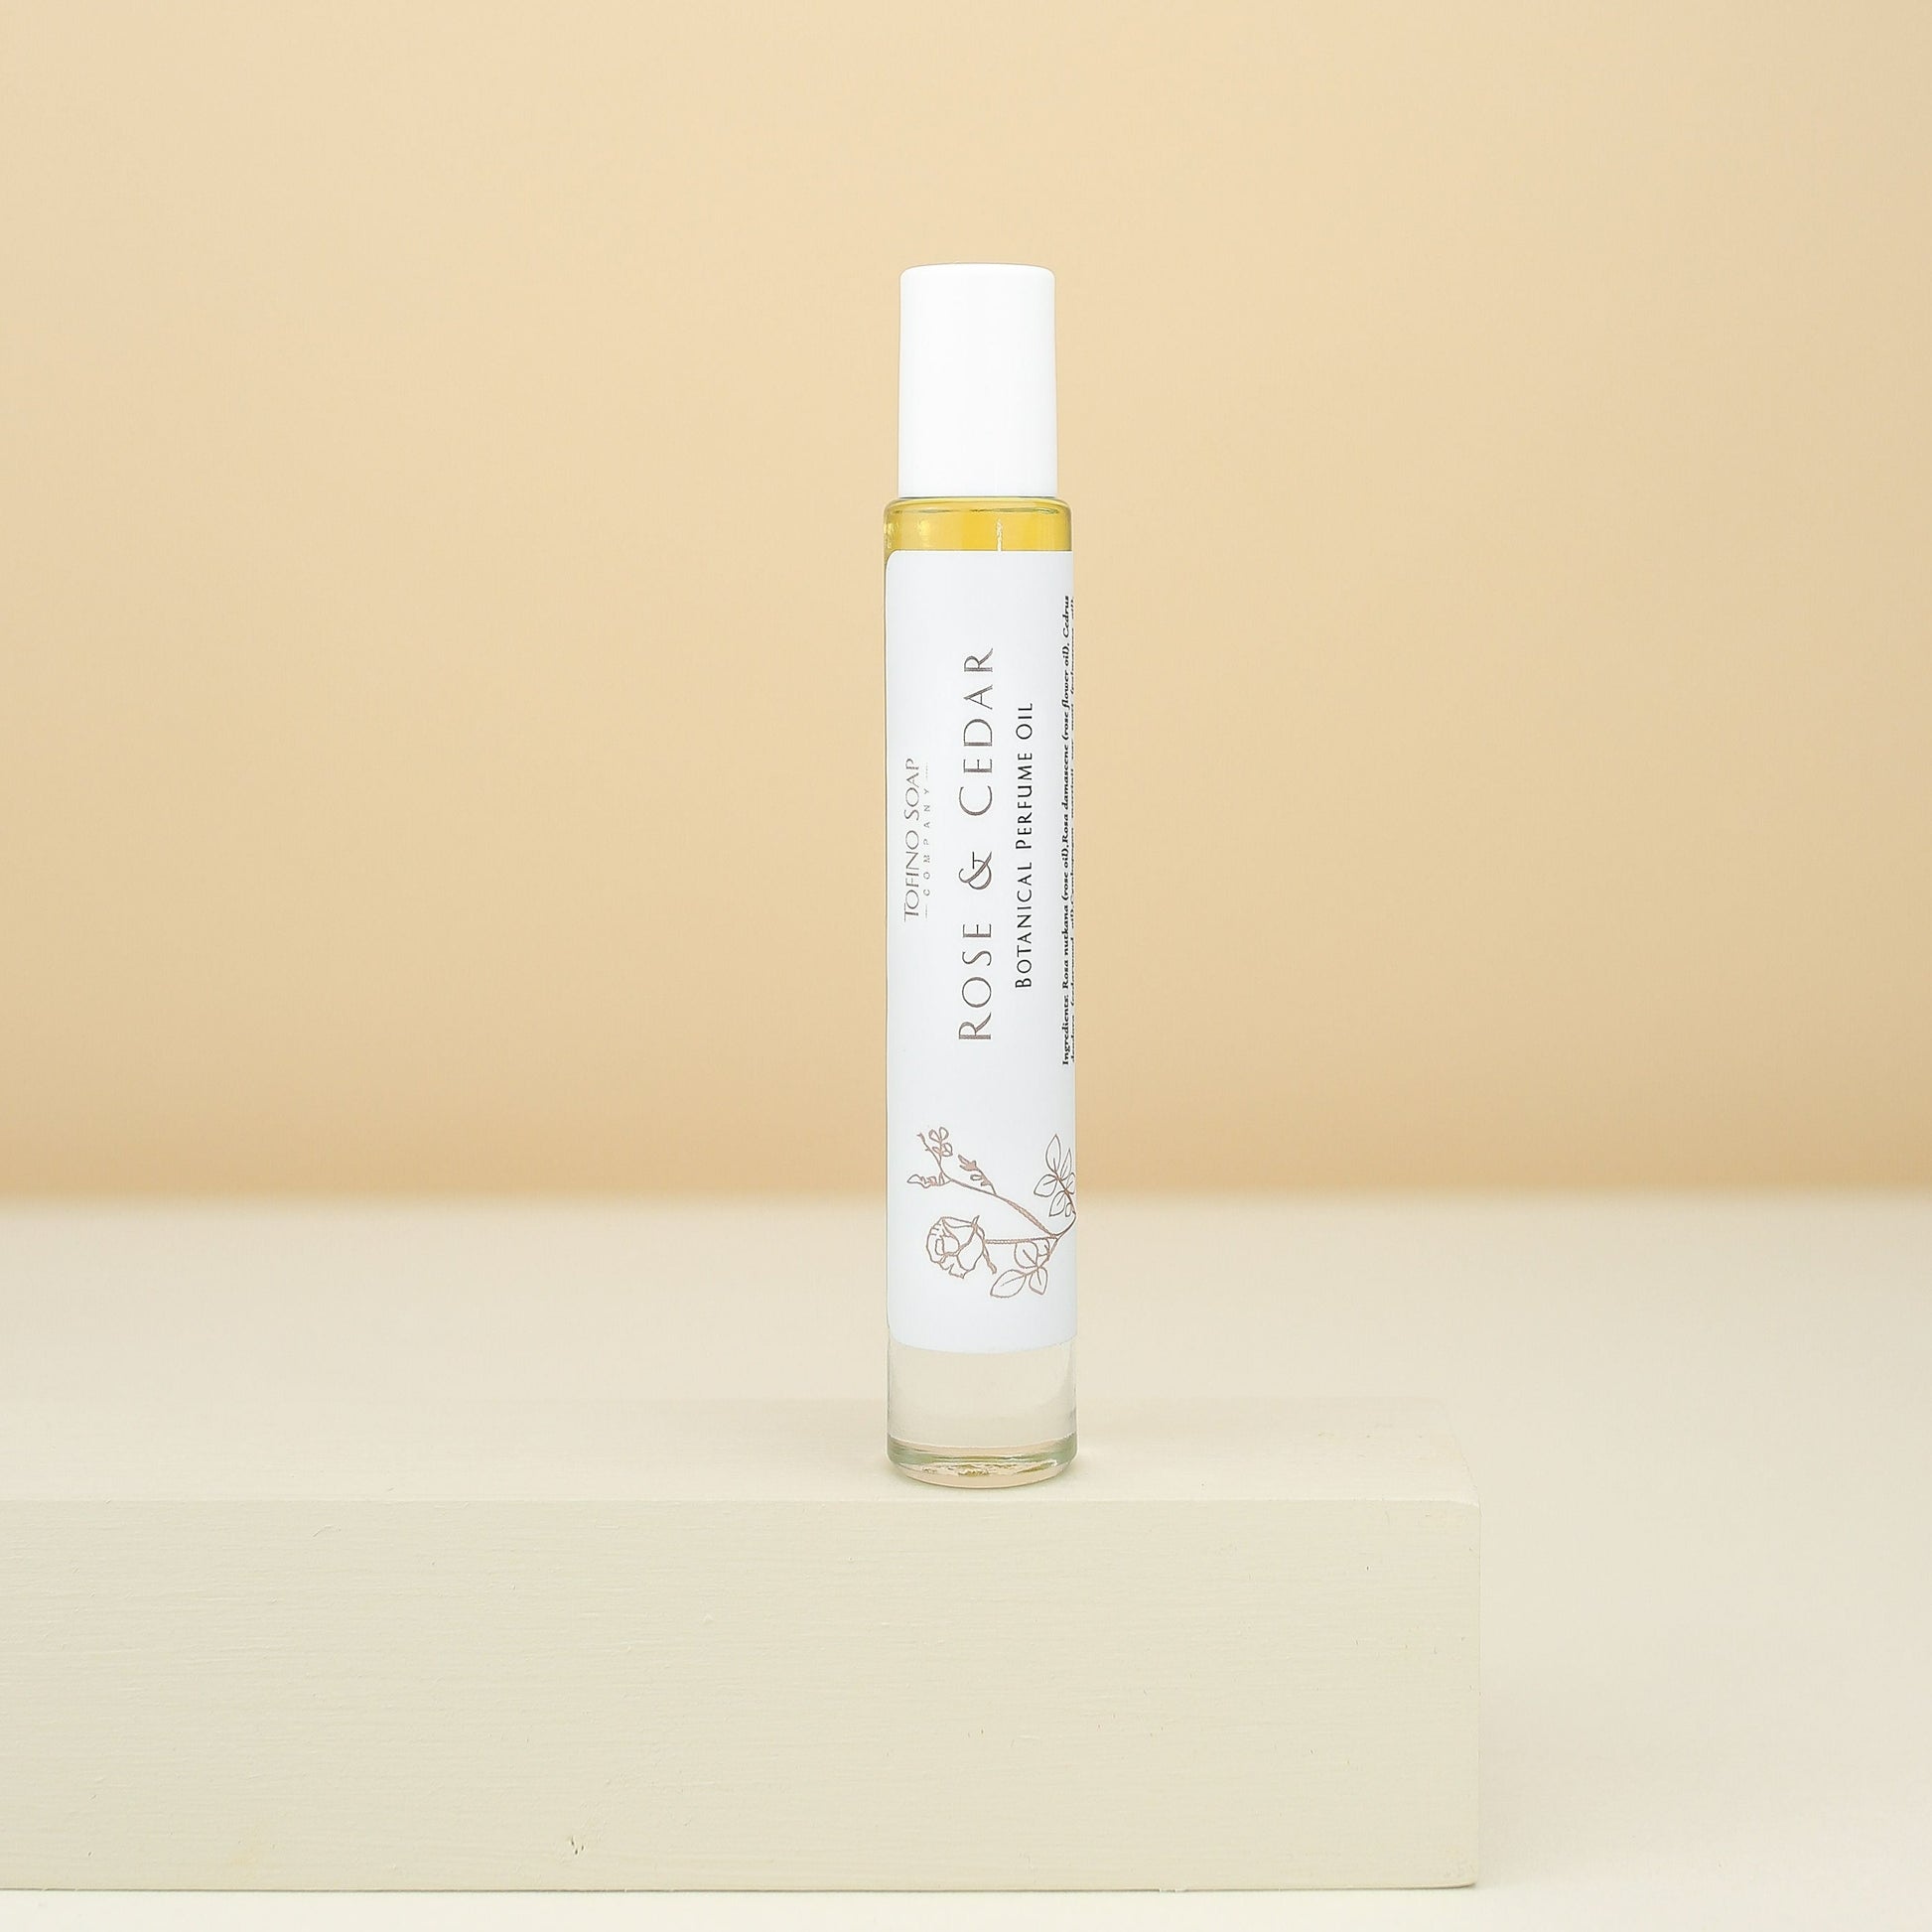 ROSE & CEDAR - Tofino plant perfume